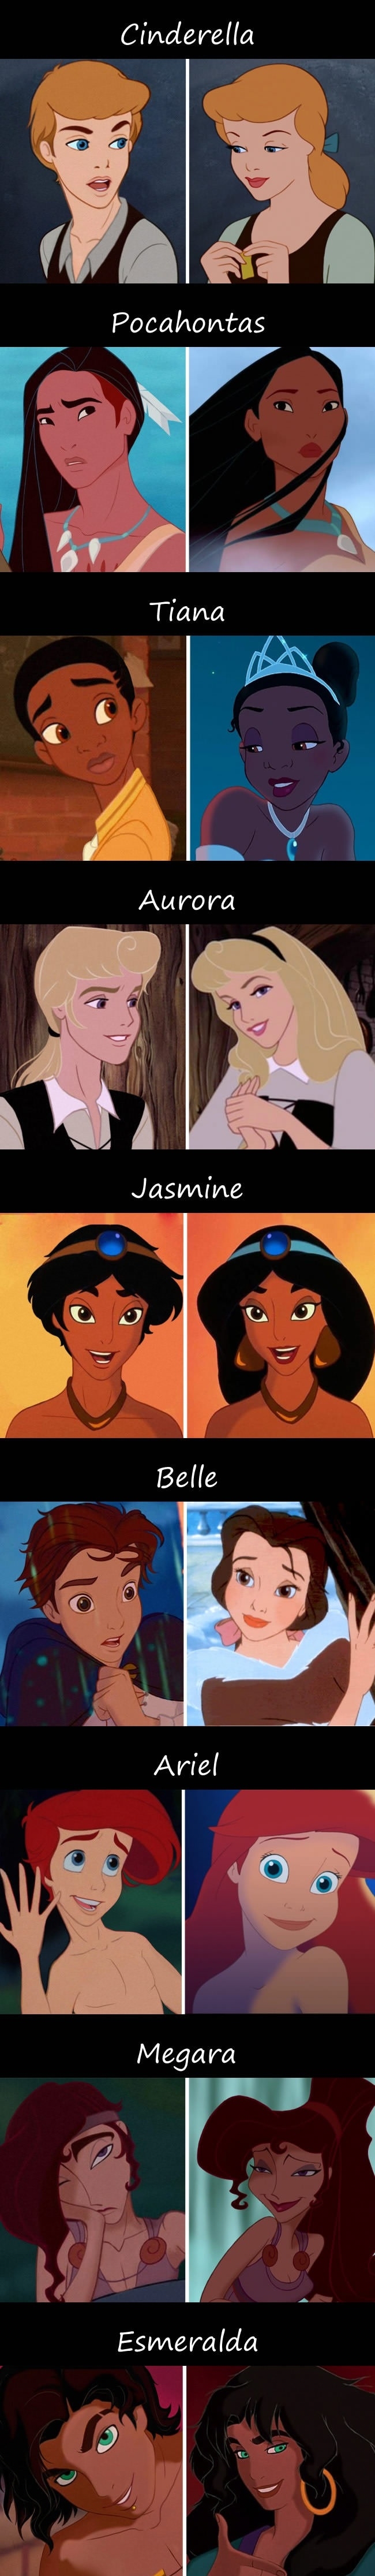 If Disney princesses were men